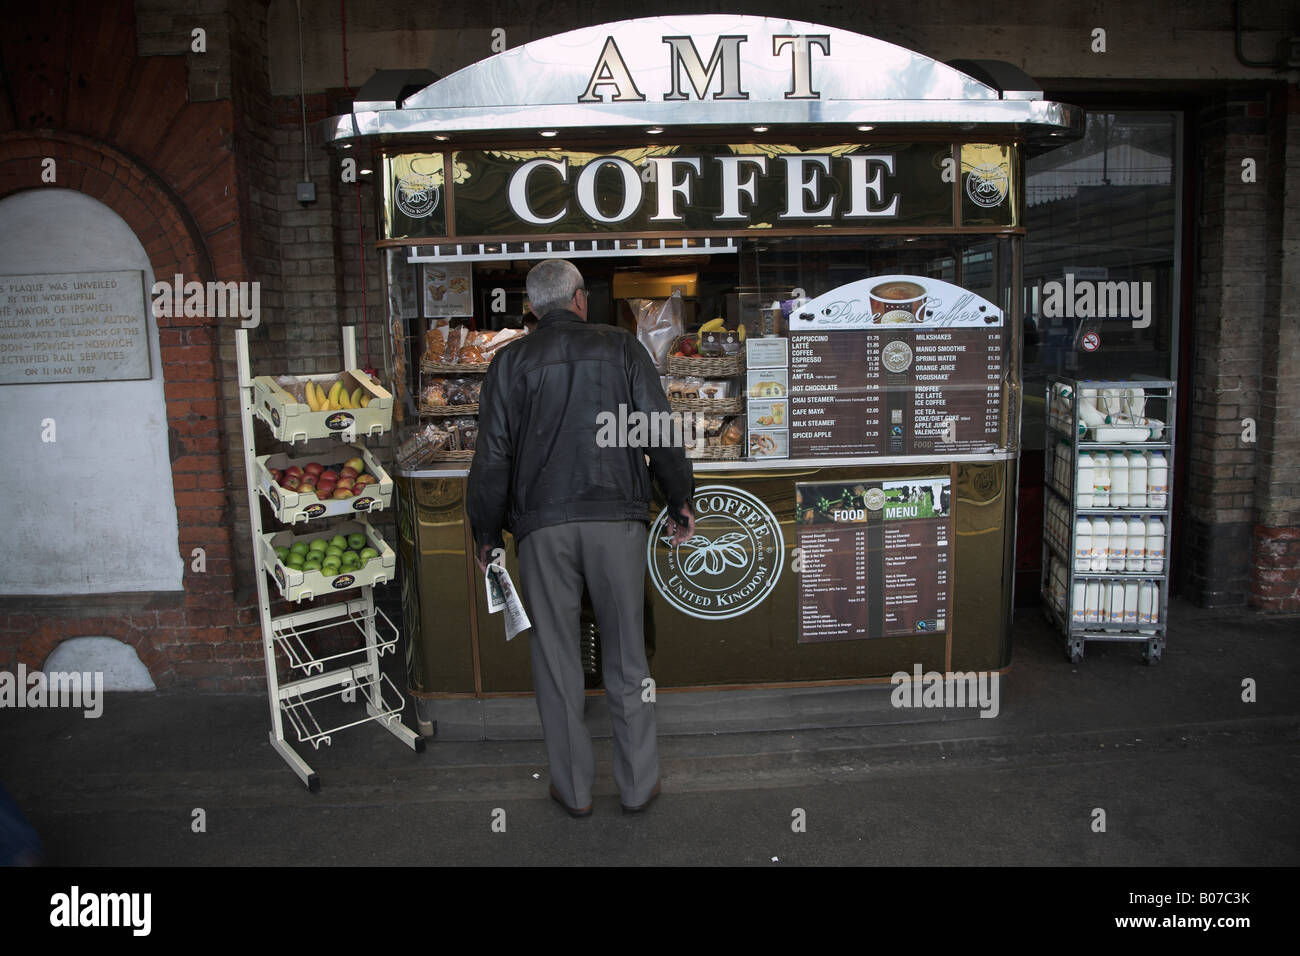 AMT stand café estación de Ipswich, Suffolk, Inglaterra Foto de stock